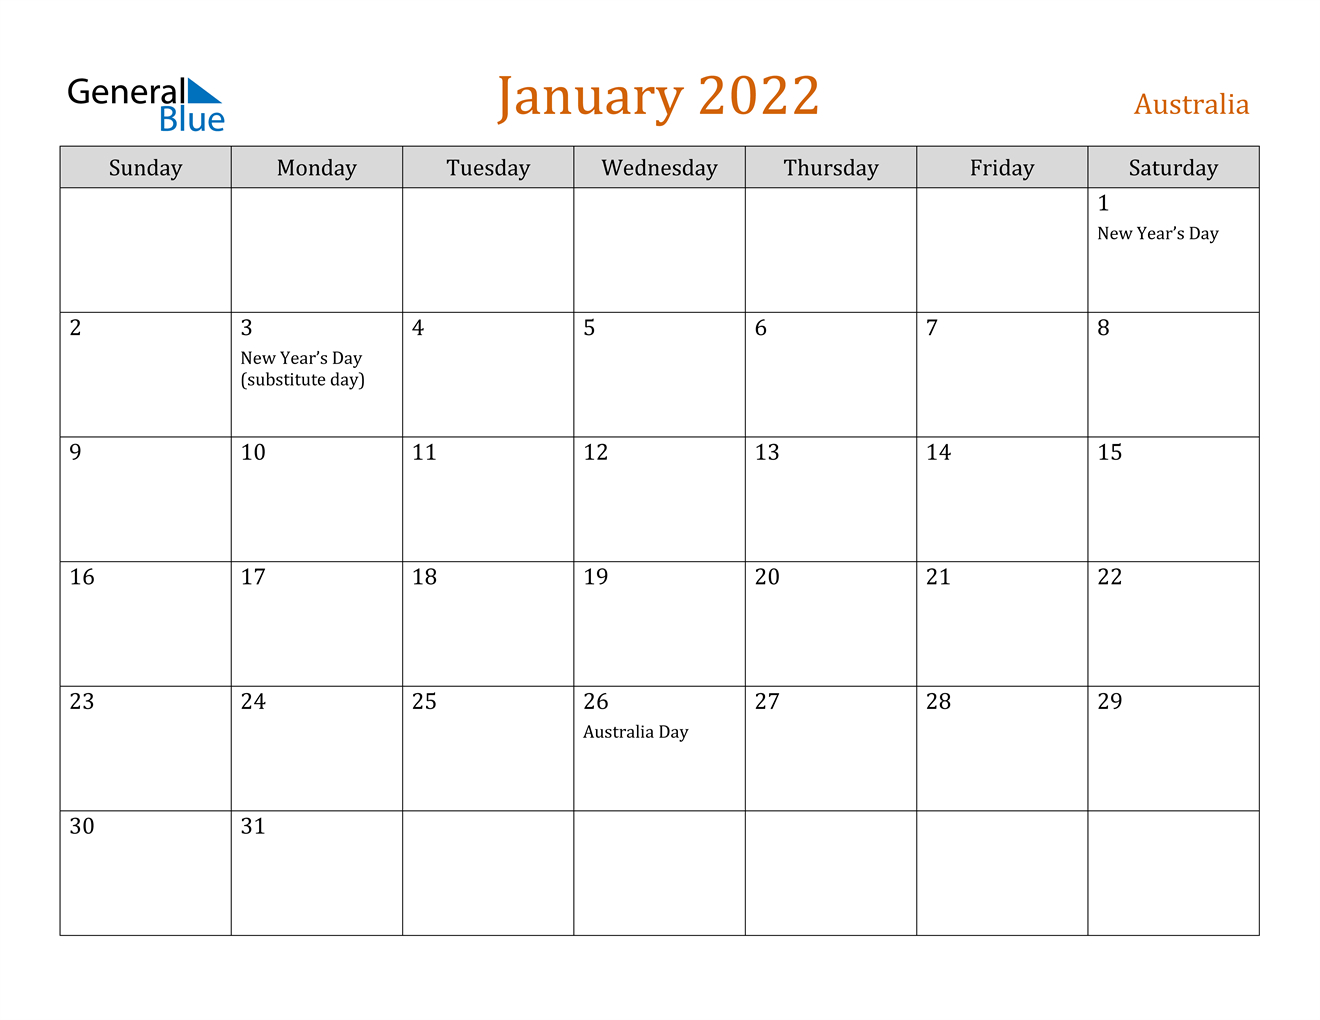 January 2022 Calendar - Australia